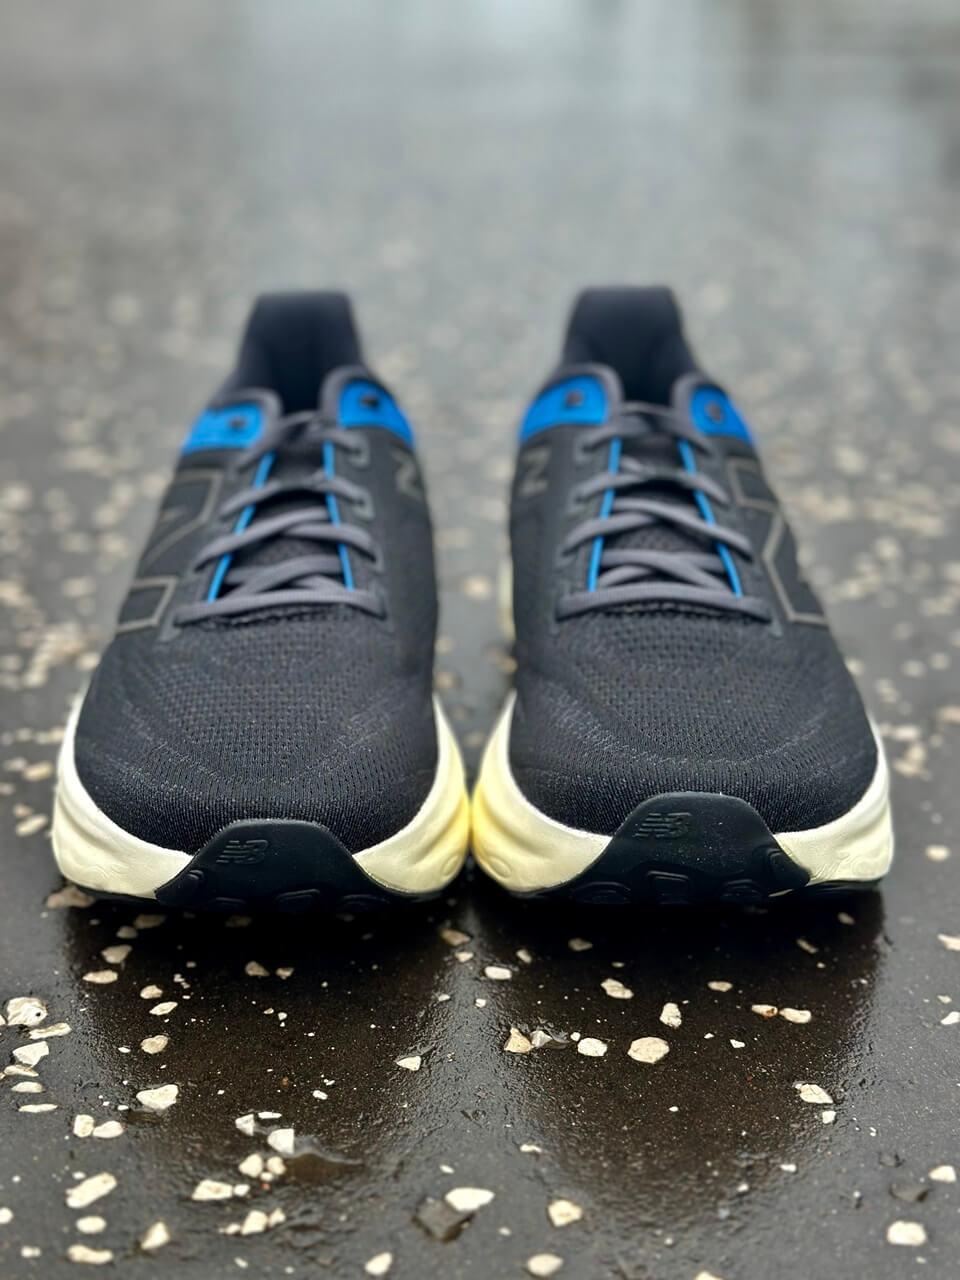 Pair of Men's New Balance Fresh Foam X 1080 V13 running shoes facing forward on tarmac road